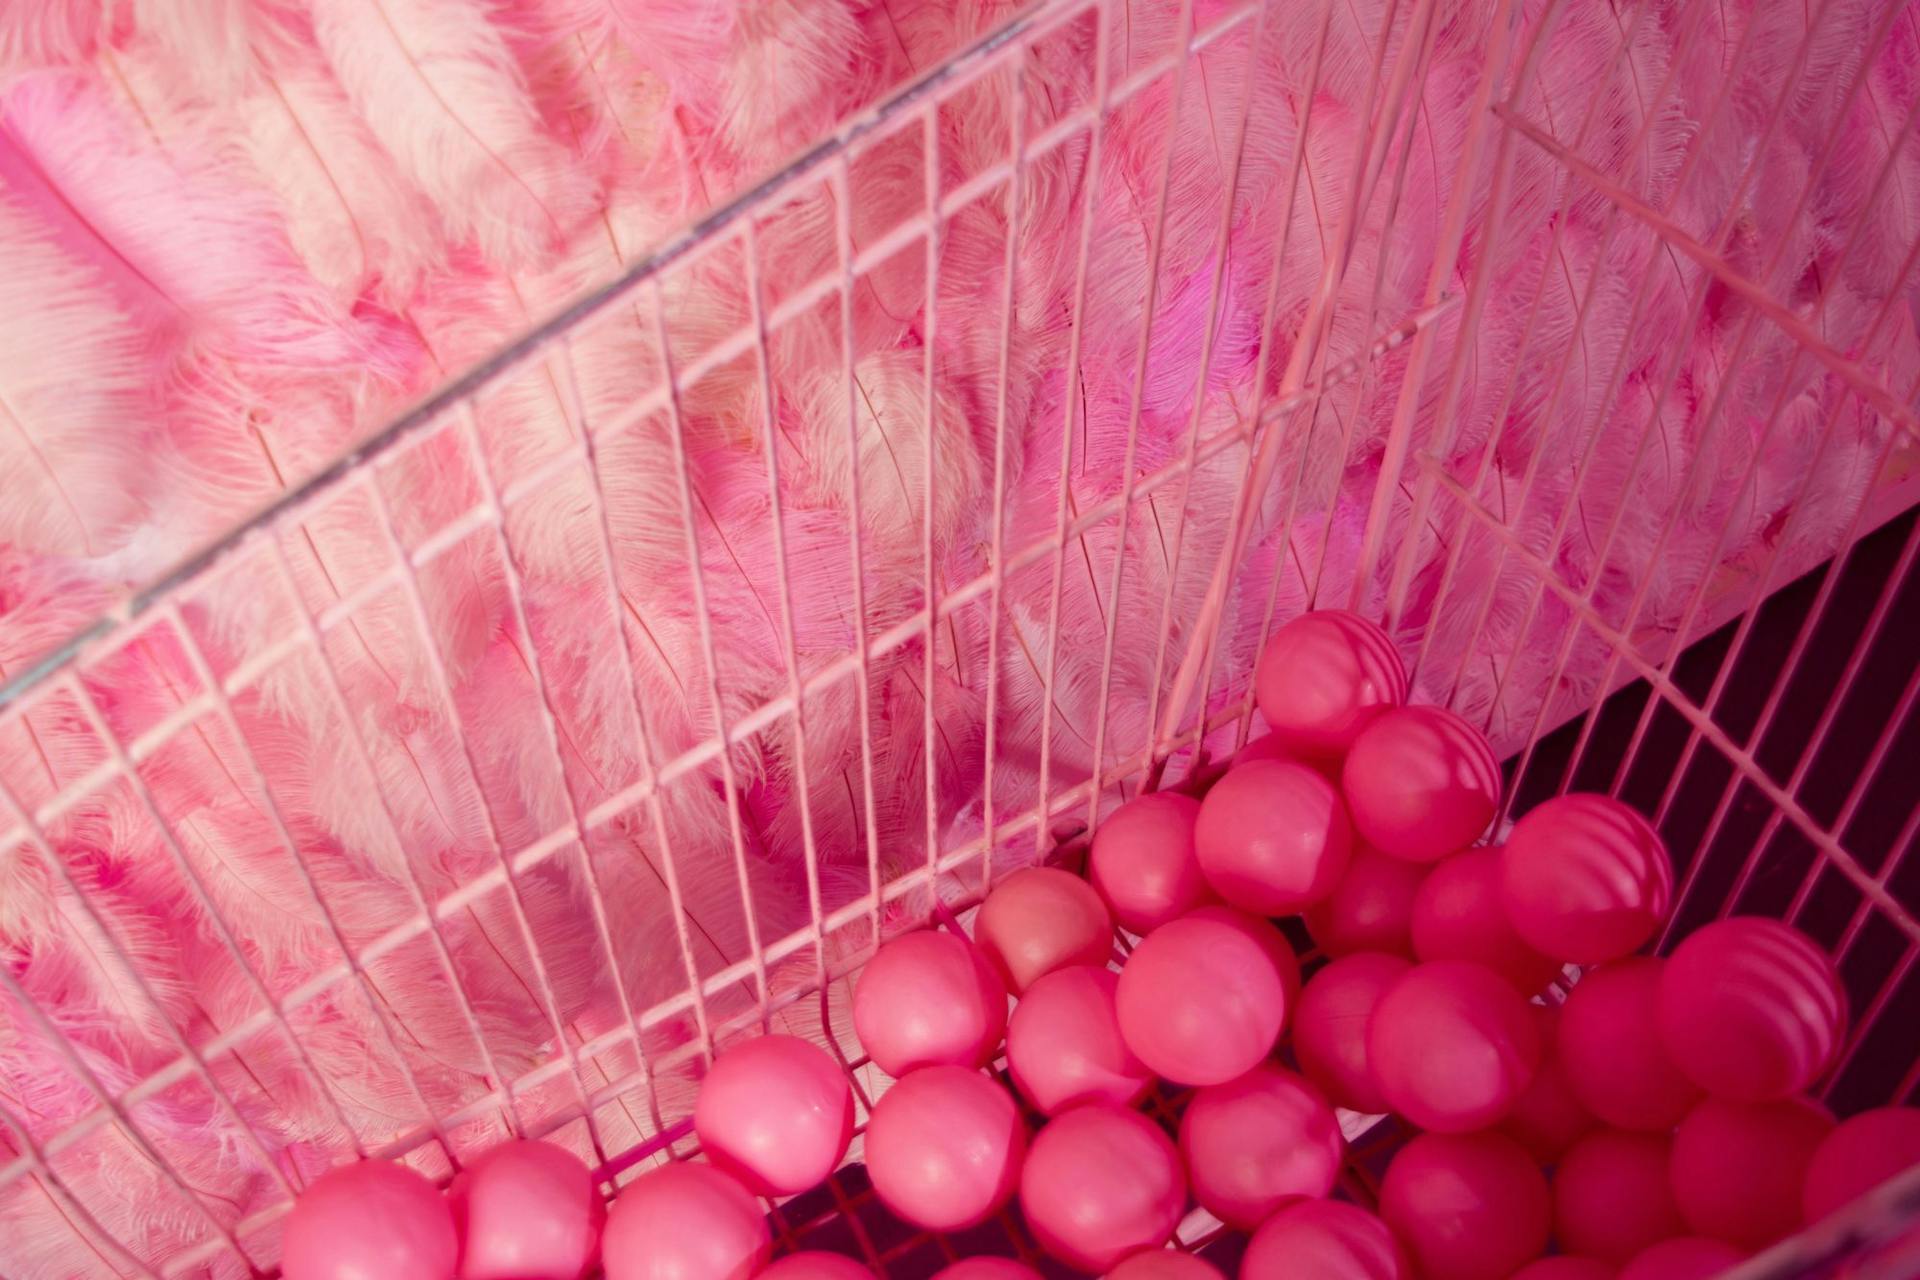 Pink balls in a shopping basket